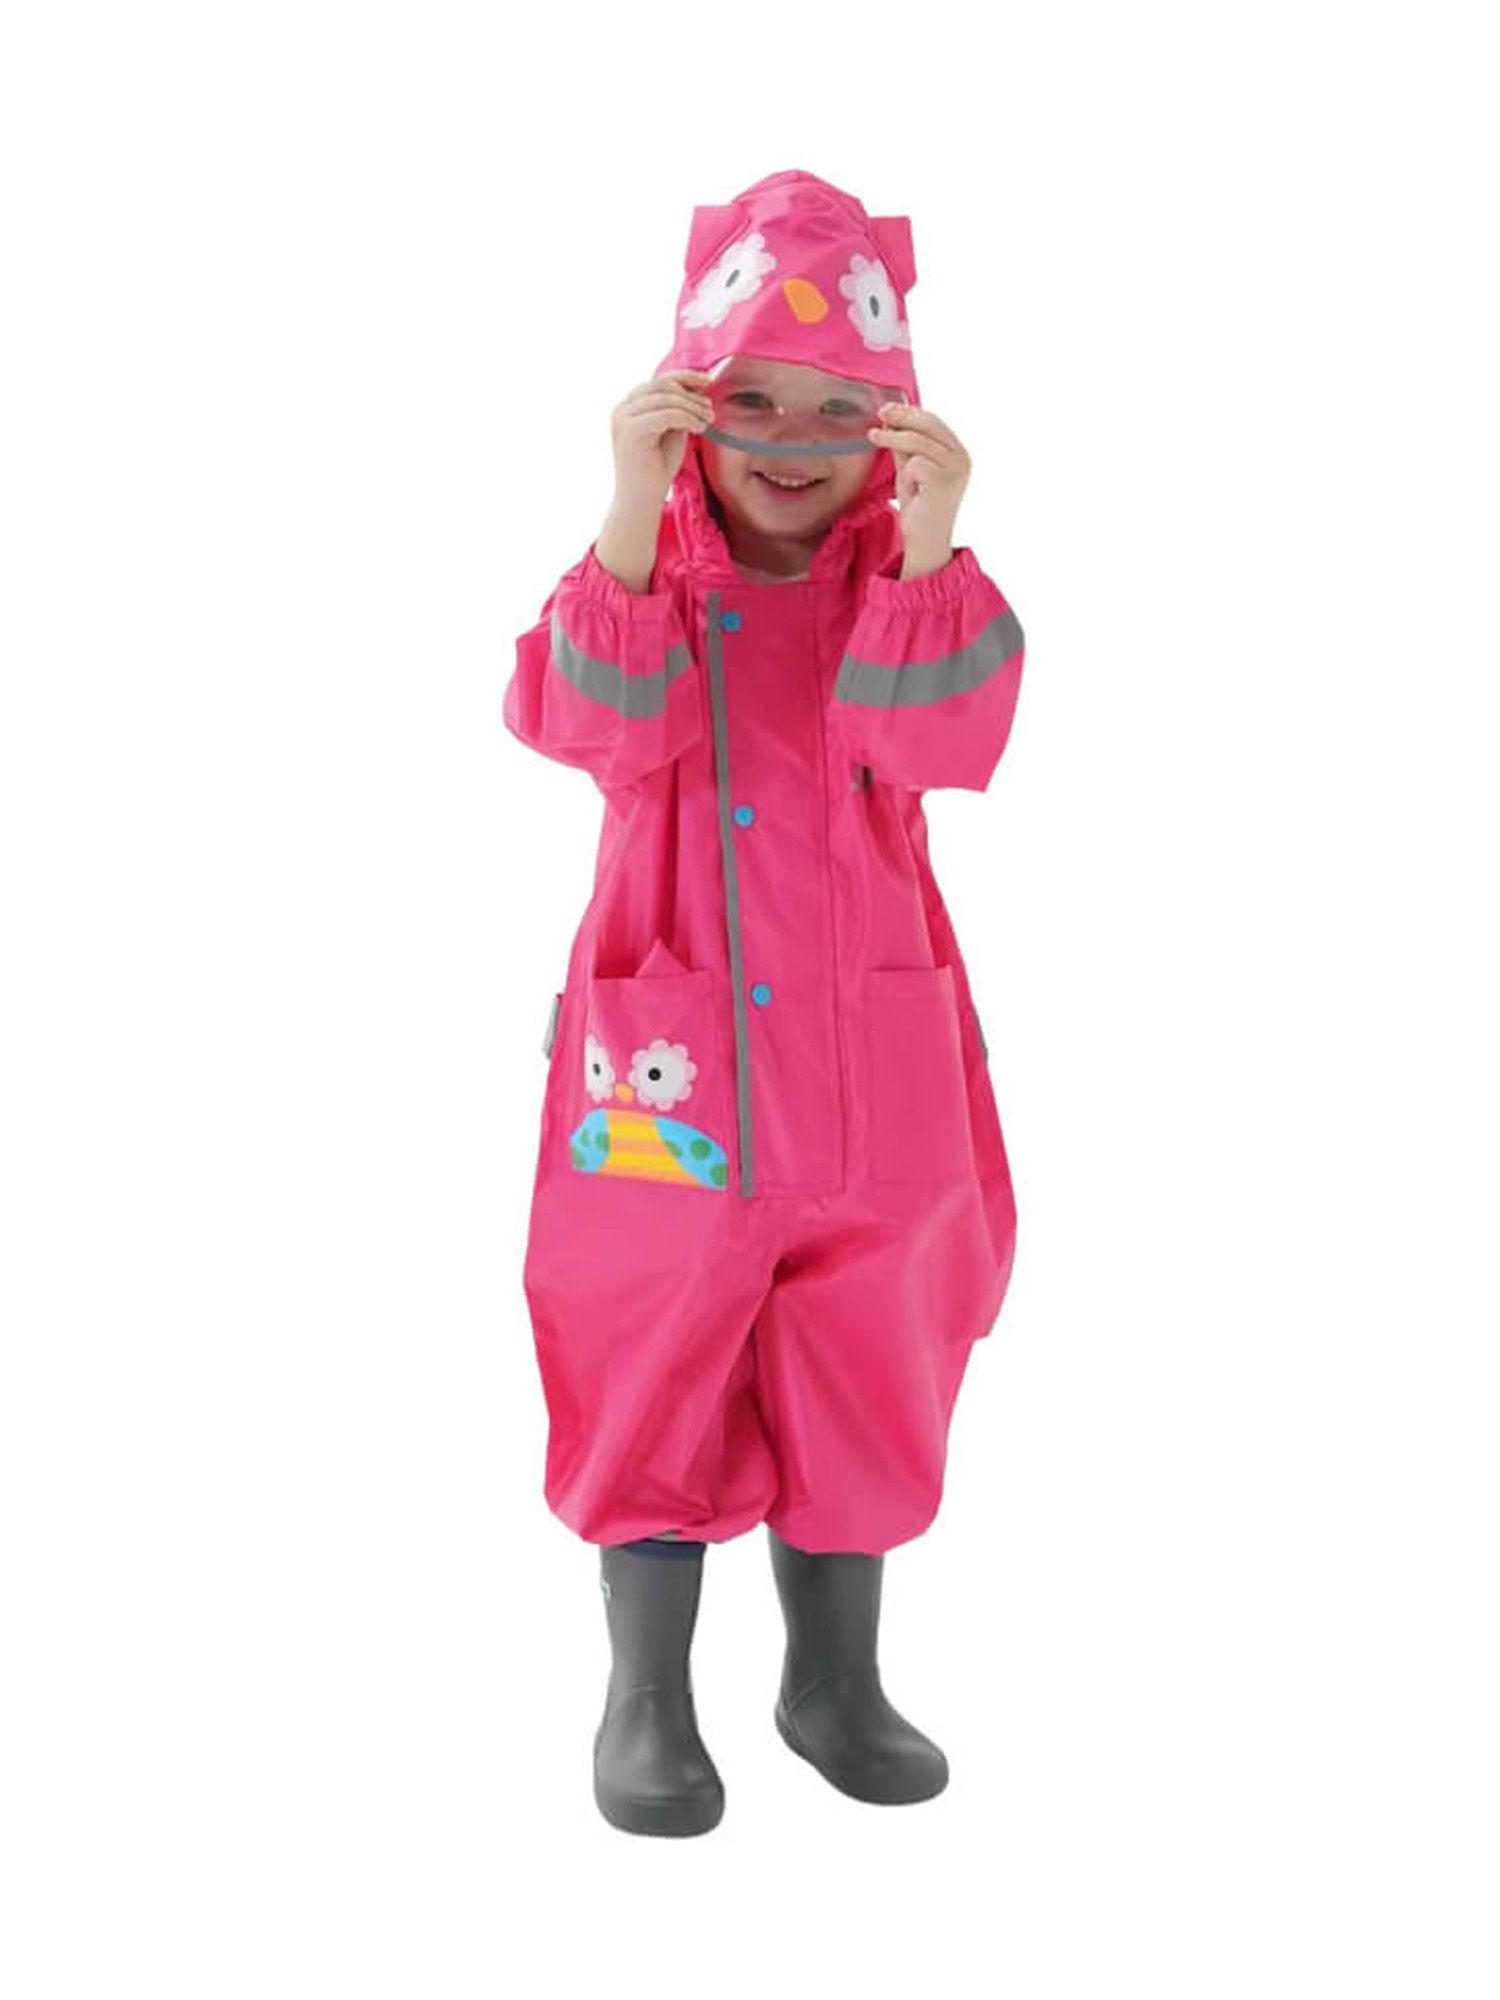 raincoat for kids - fuchsia pink cute owl theme